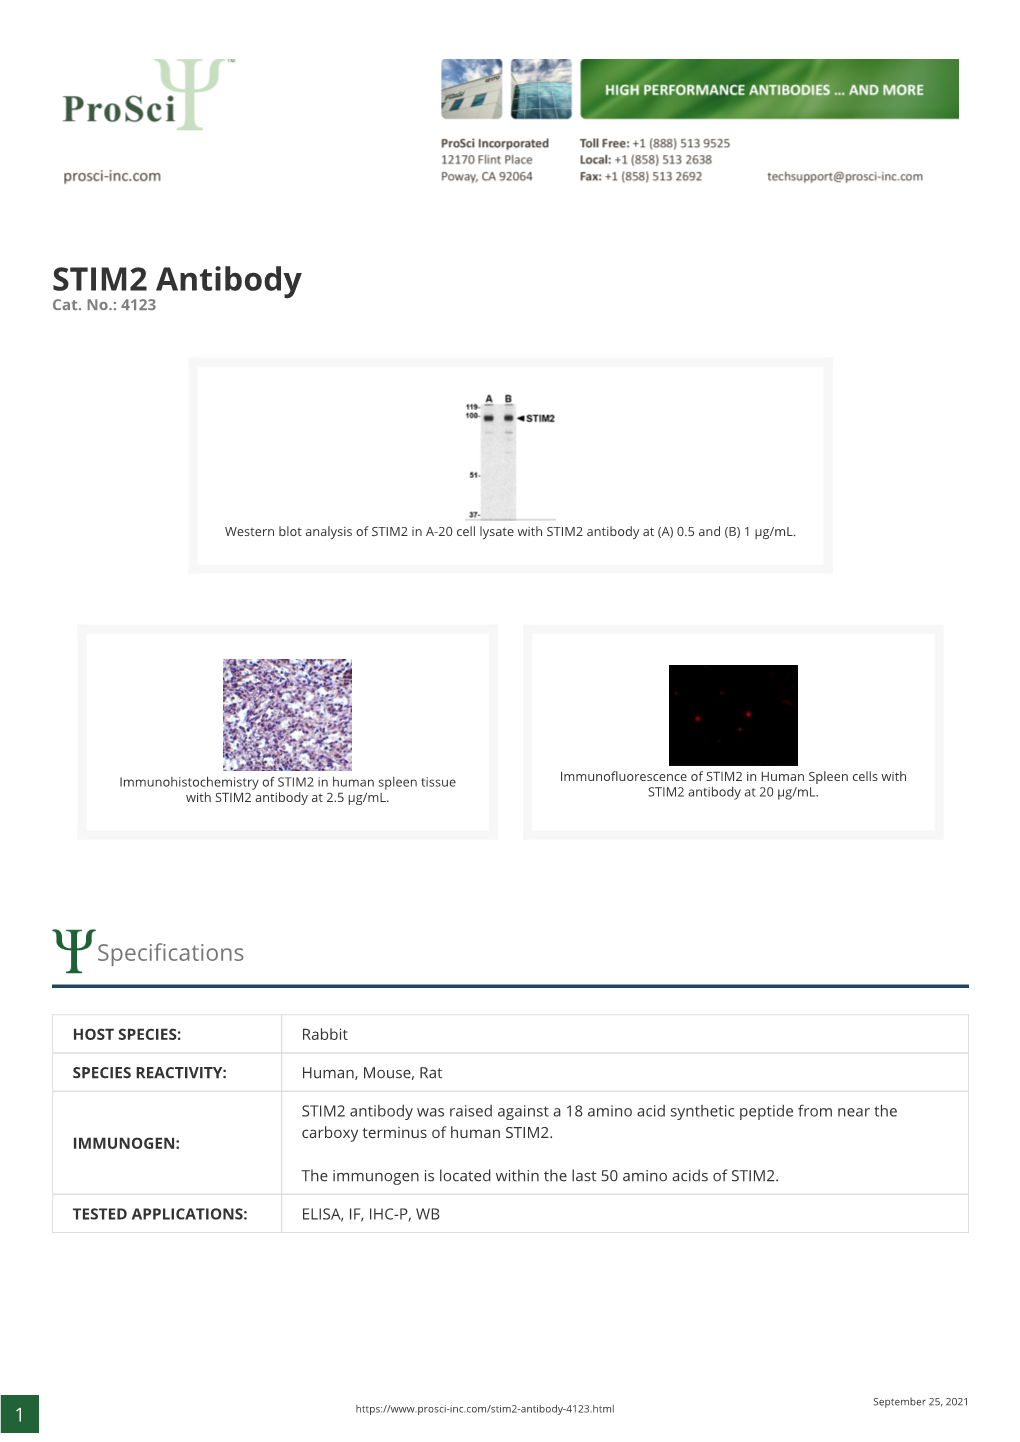 STIM2 Antibody Cat